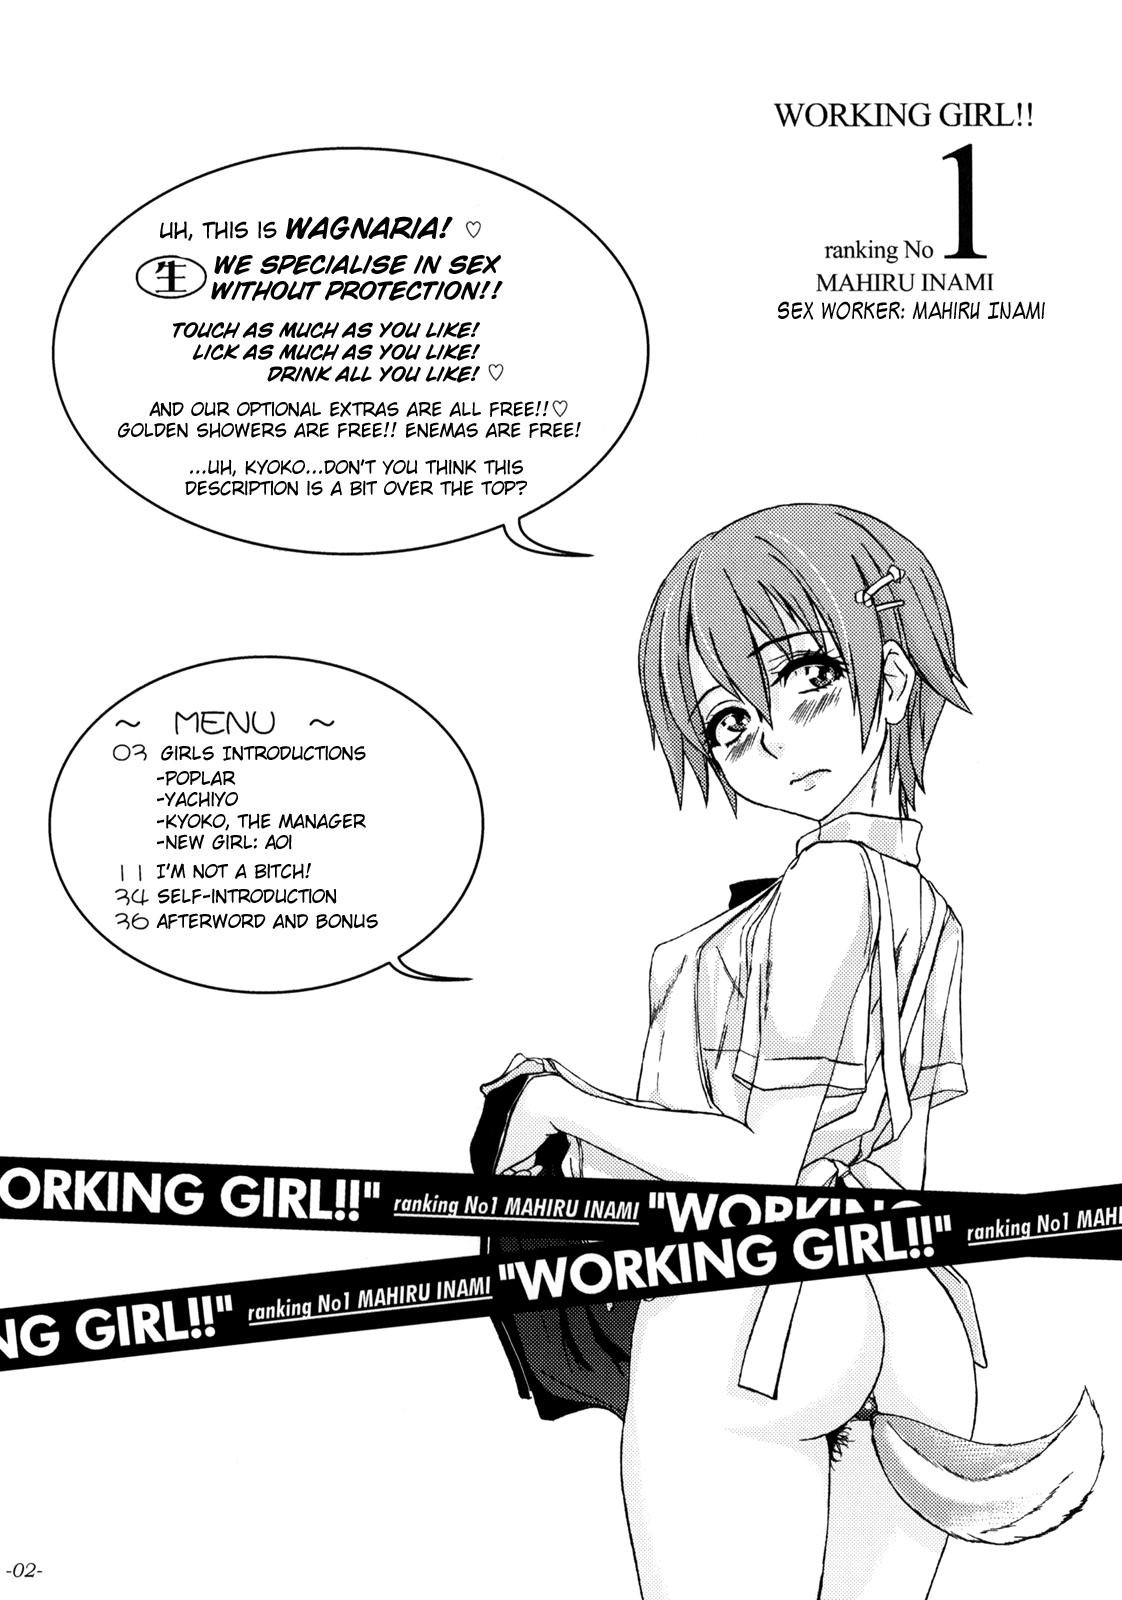 WORKING GIRL!! ranking No 1 Fuuzokujou Inami Mahiru 3